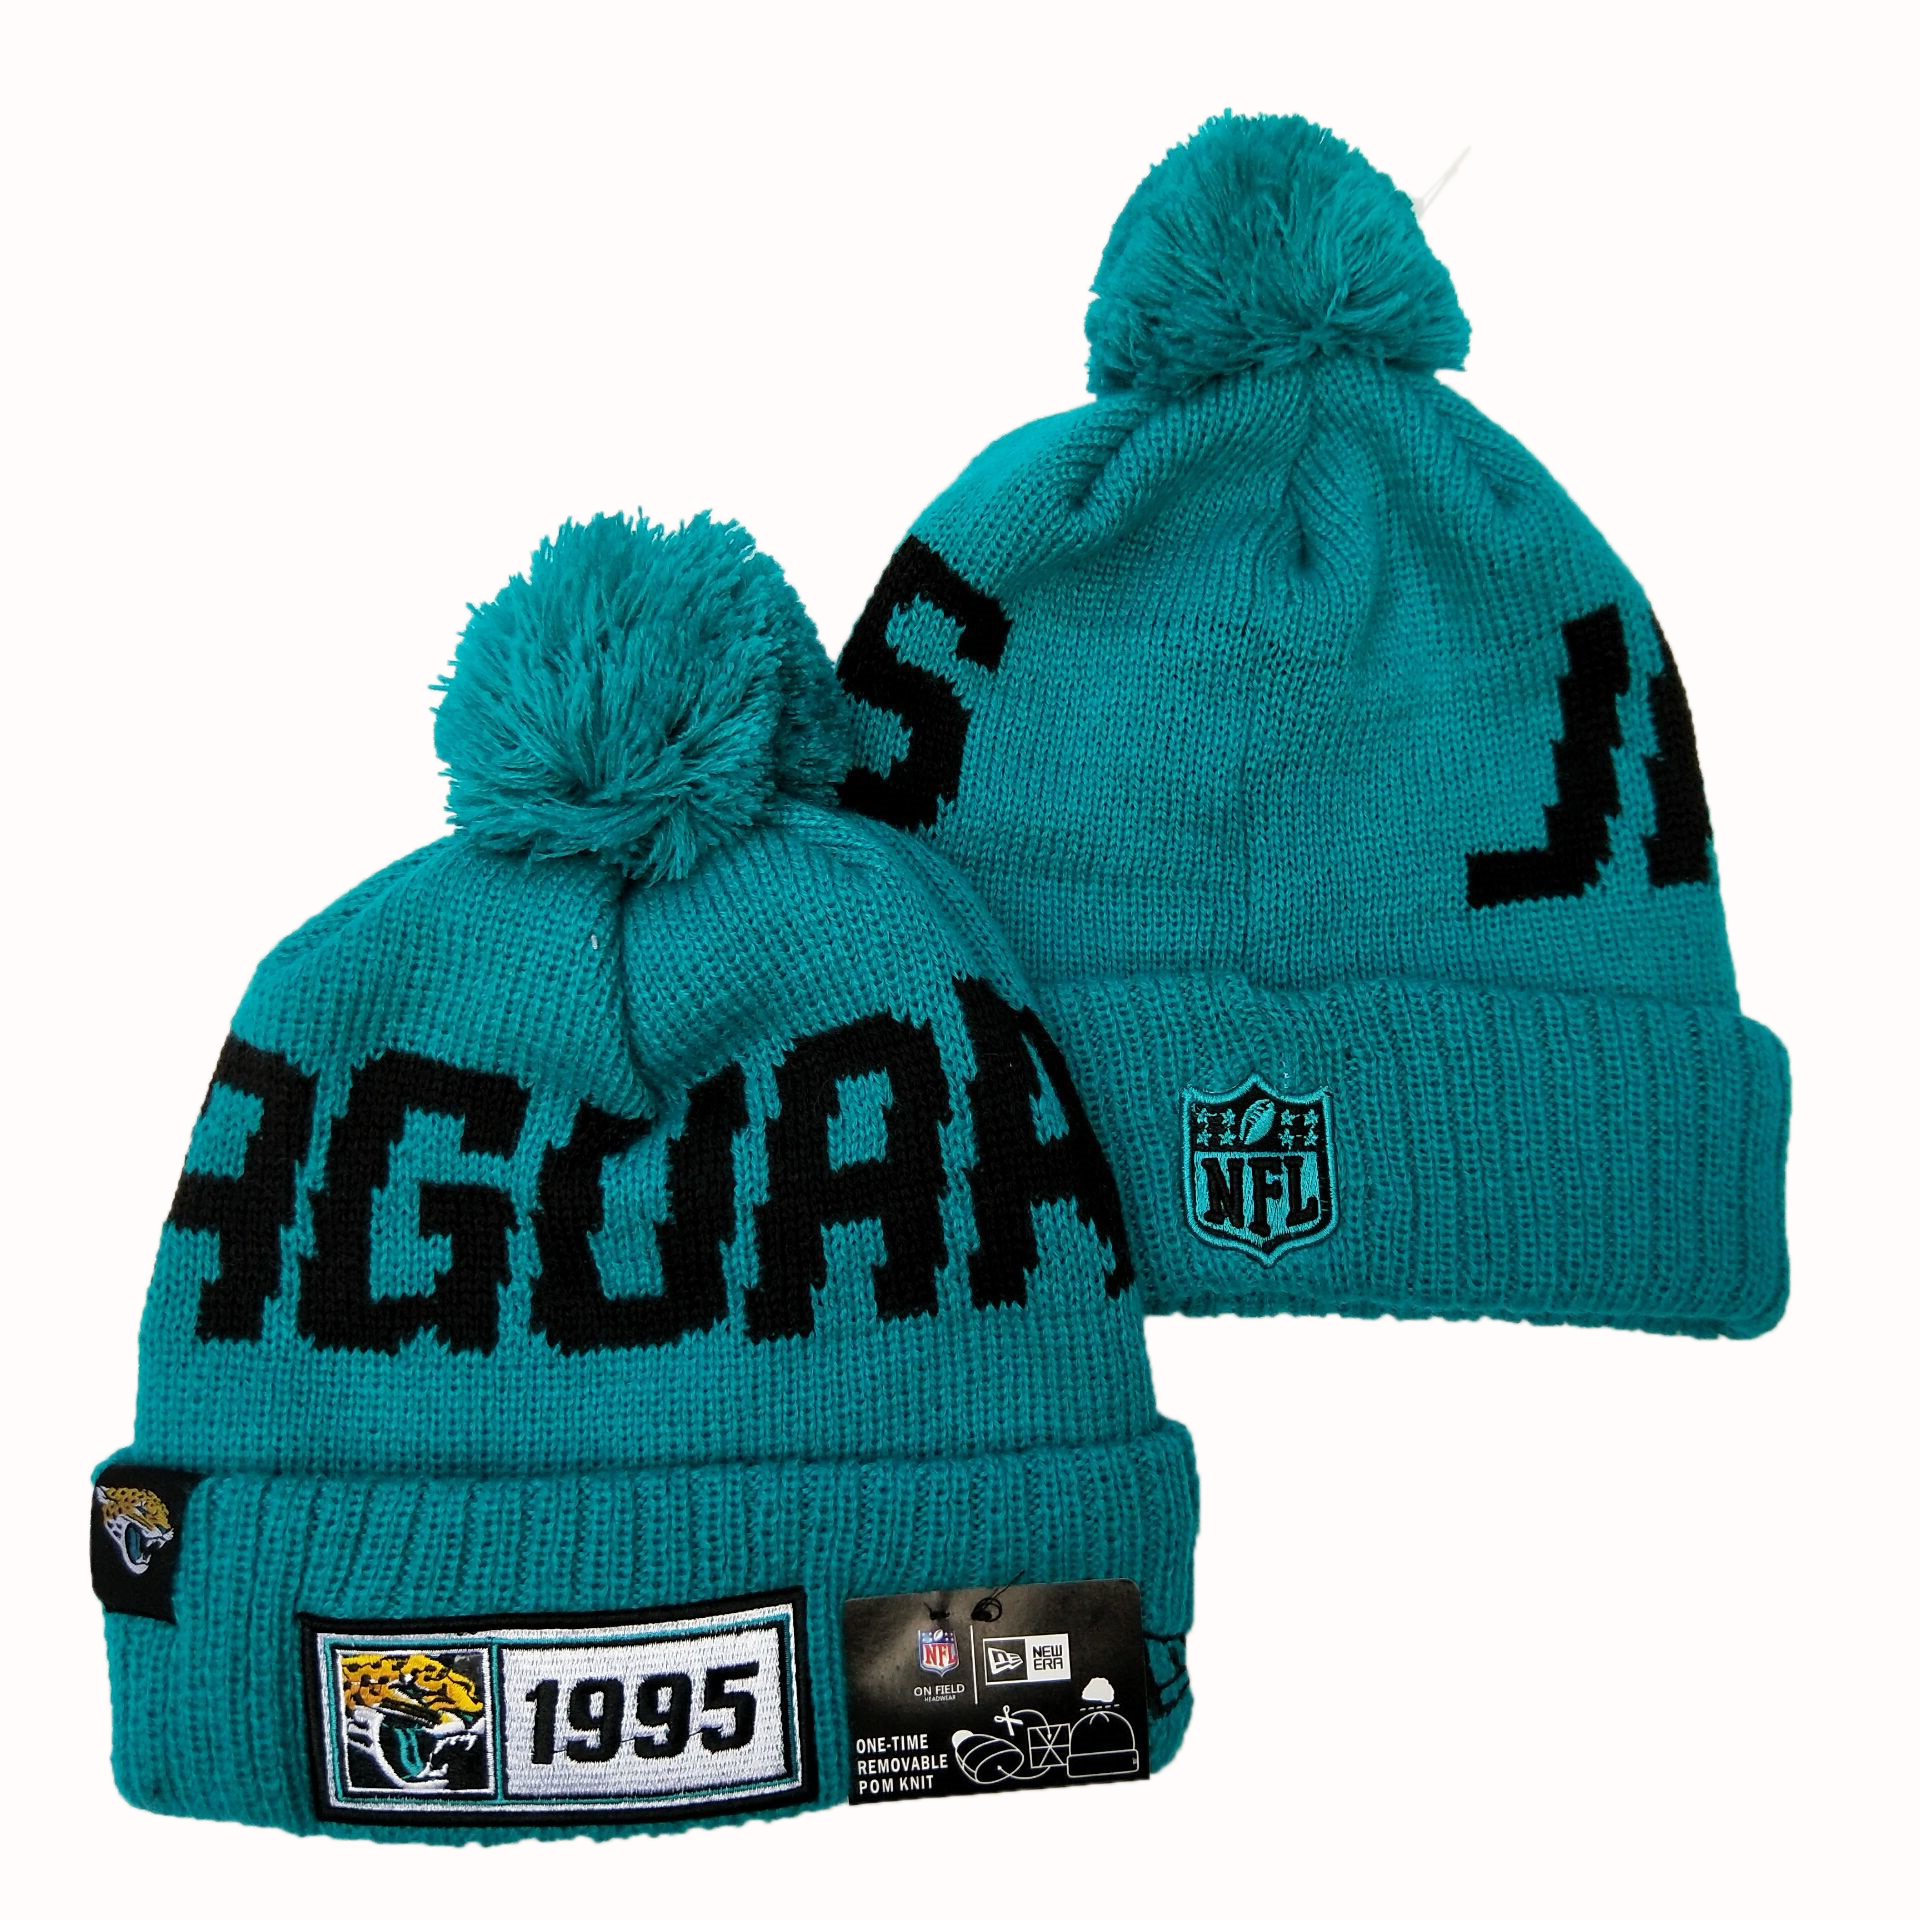 NFL Jacksonville Jaguars Stitched Snapback Hats 015